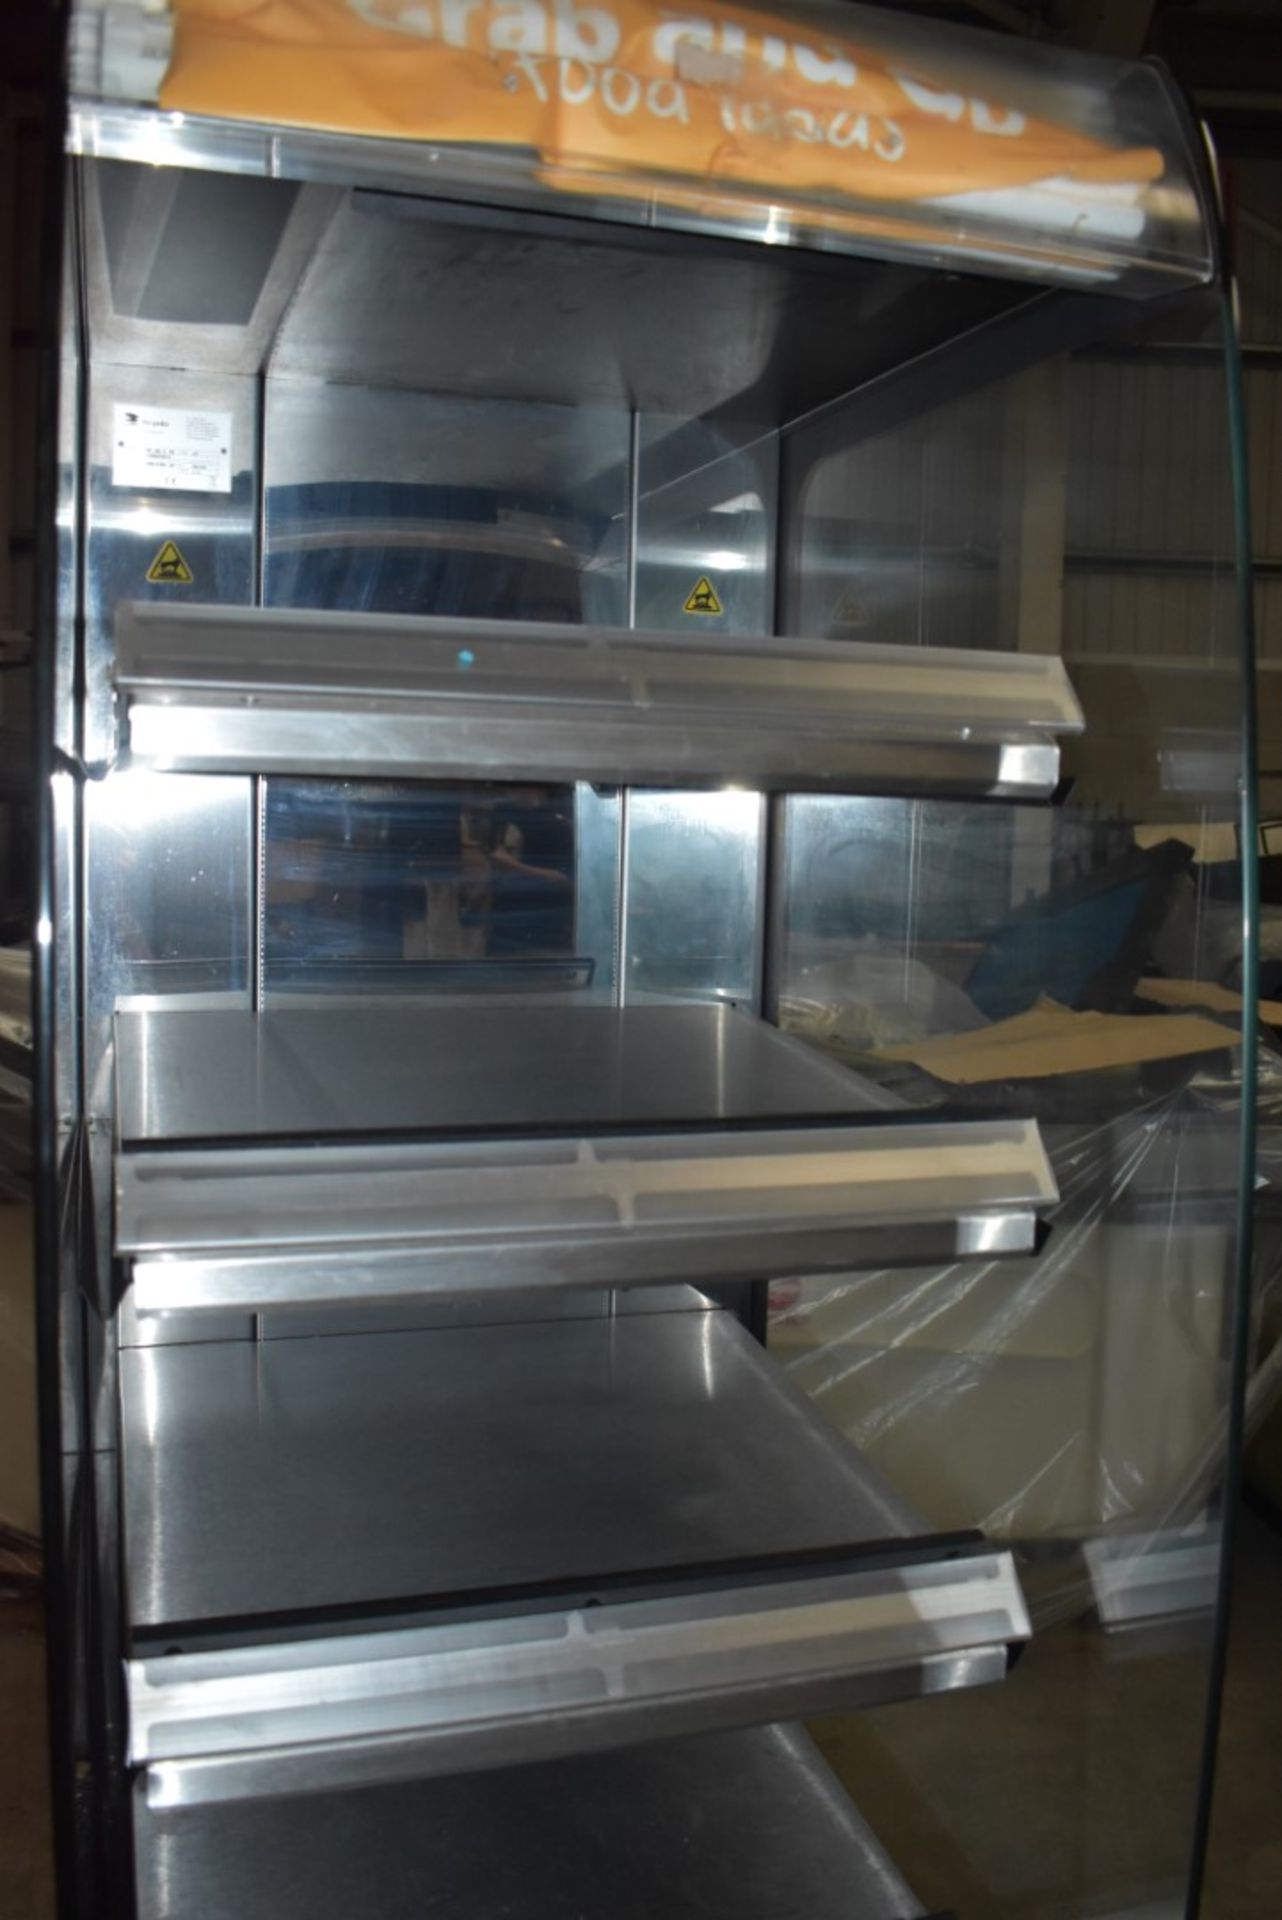 1 x Fri-Jado Four Tier Multi Deck Hot Food Warmer Heated Display Unit - Model MD60-5 SB - - Image 5 of 9